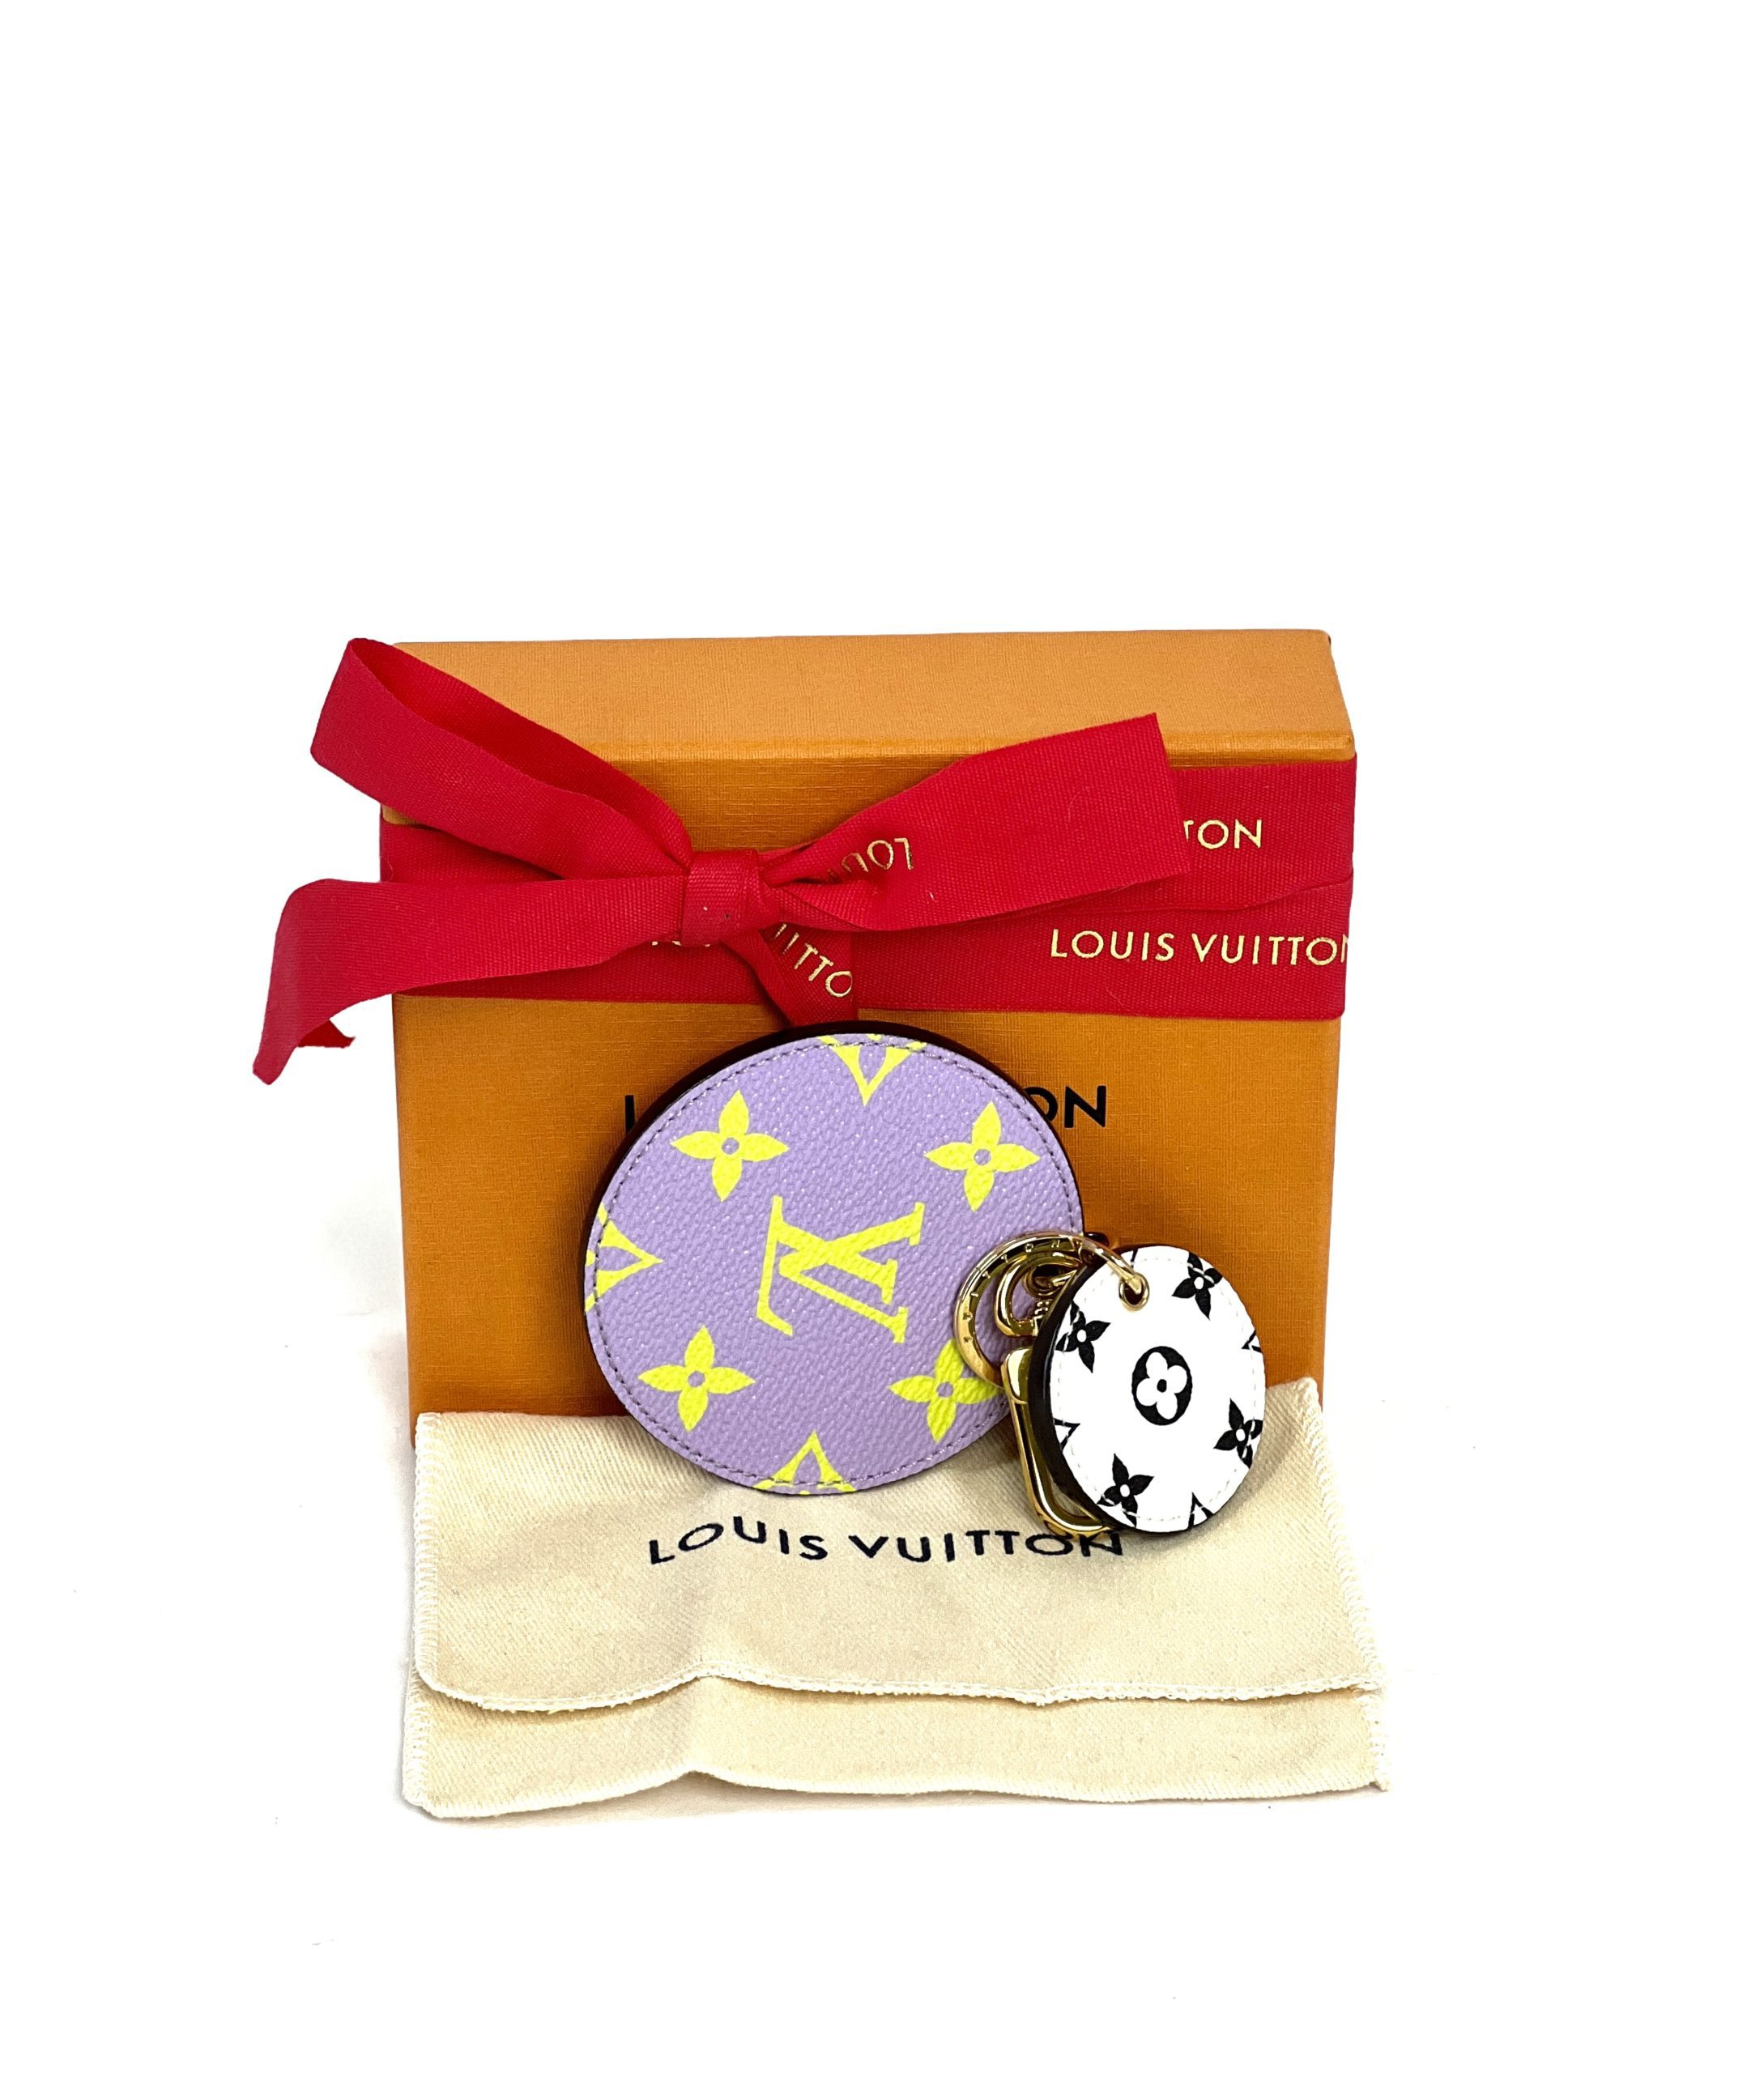 Louis Vuitton Gift Box and LV Ribbon w/tag